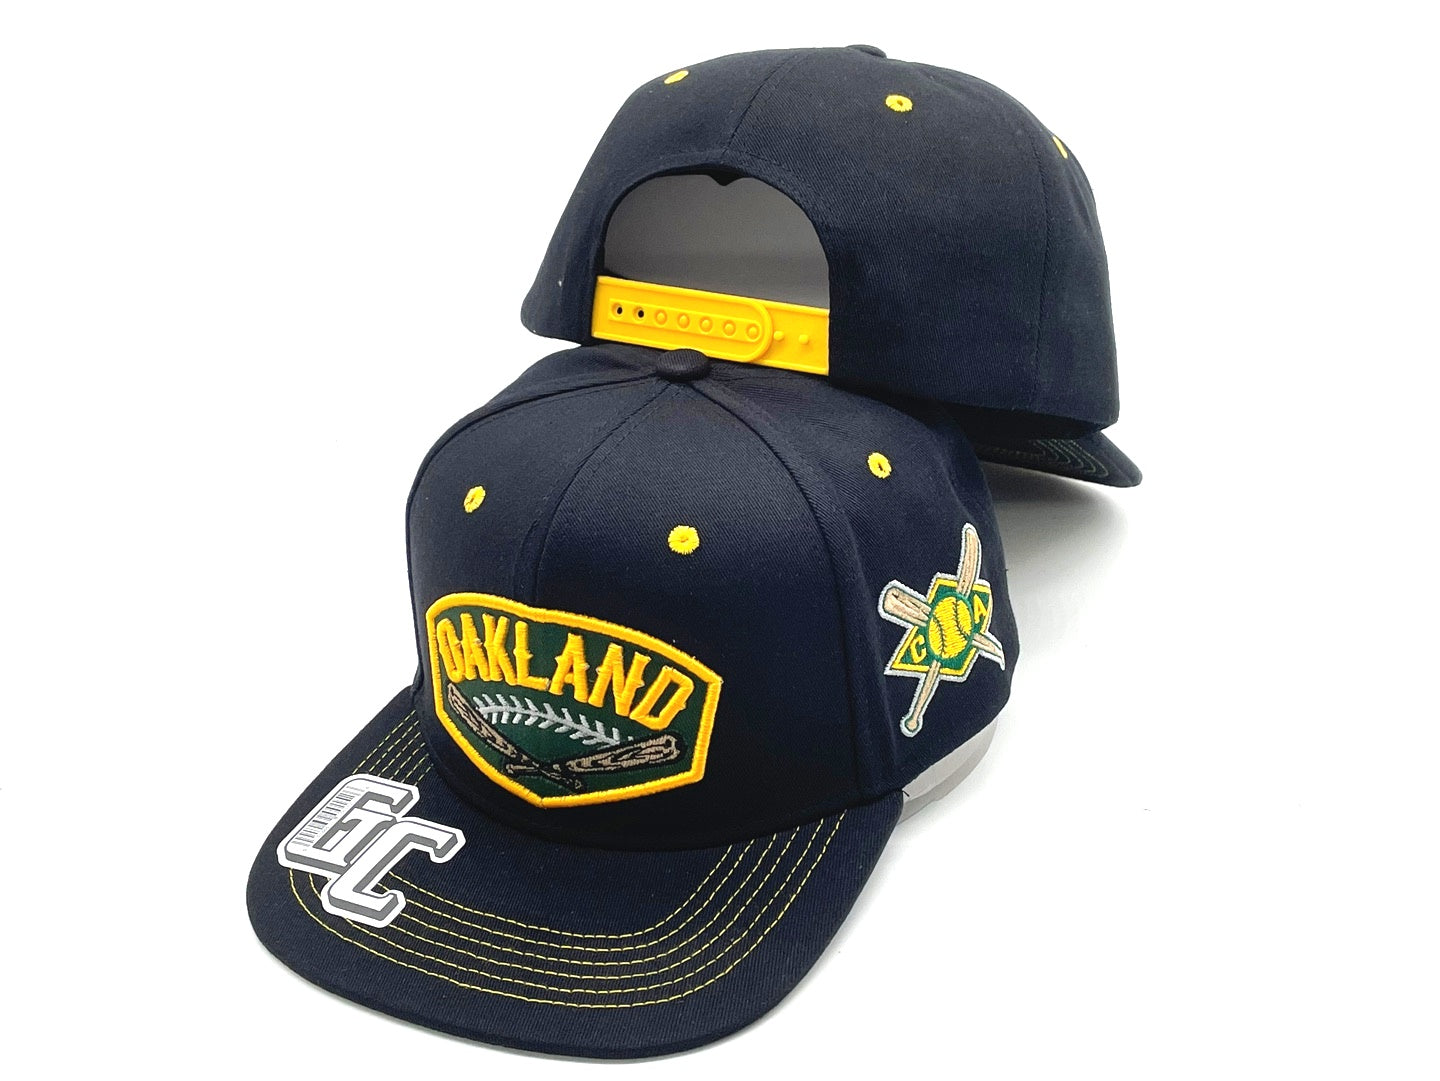 Snapback "OAKLAND" Hat Embroidered